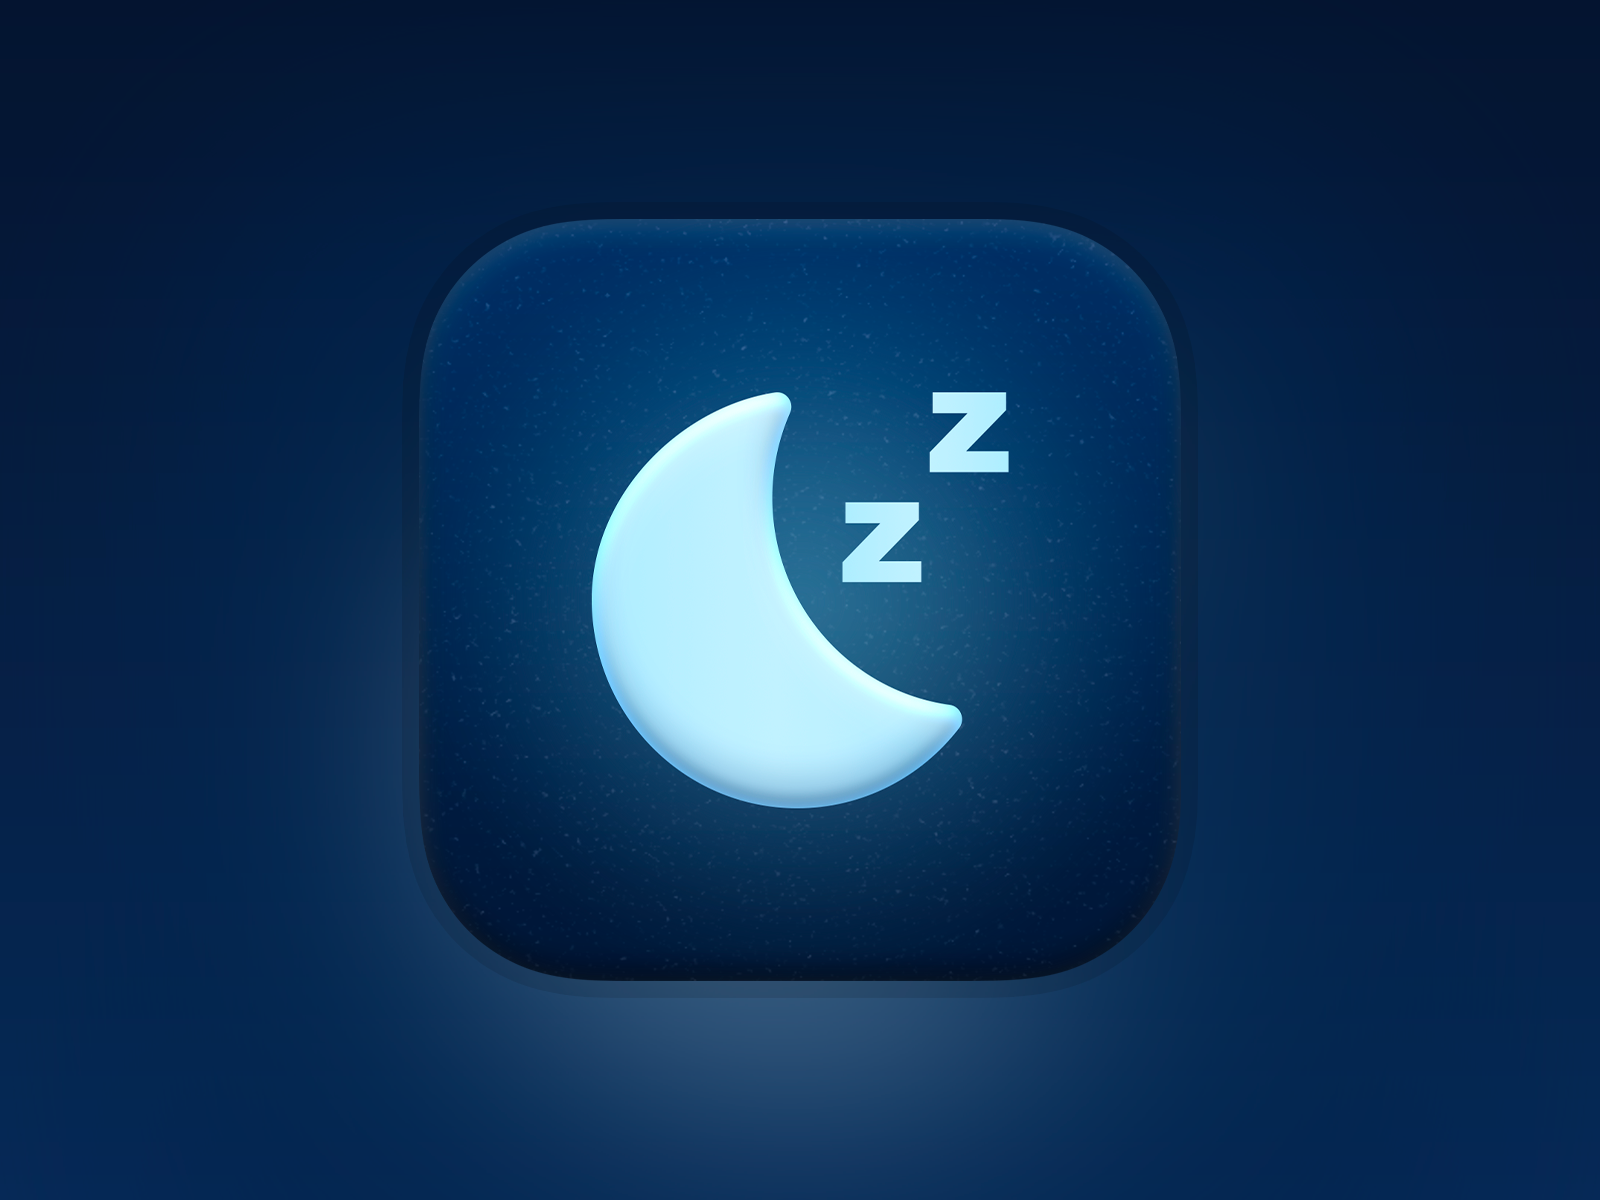 App icons design idea #32: Sleep & relaxation app icon